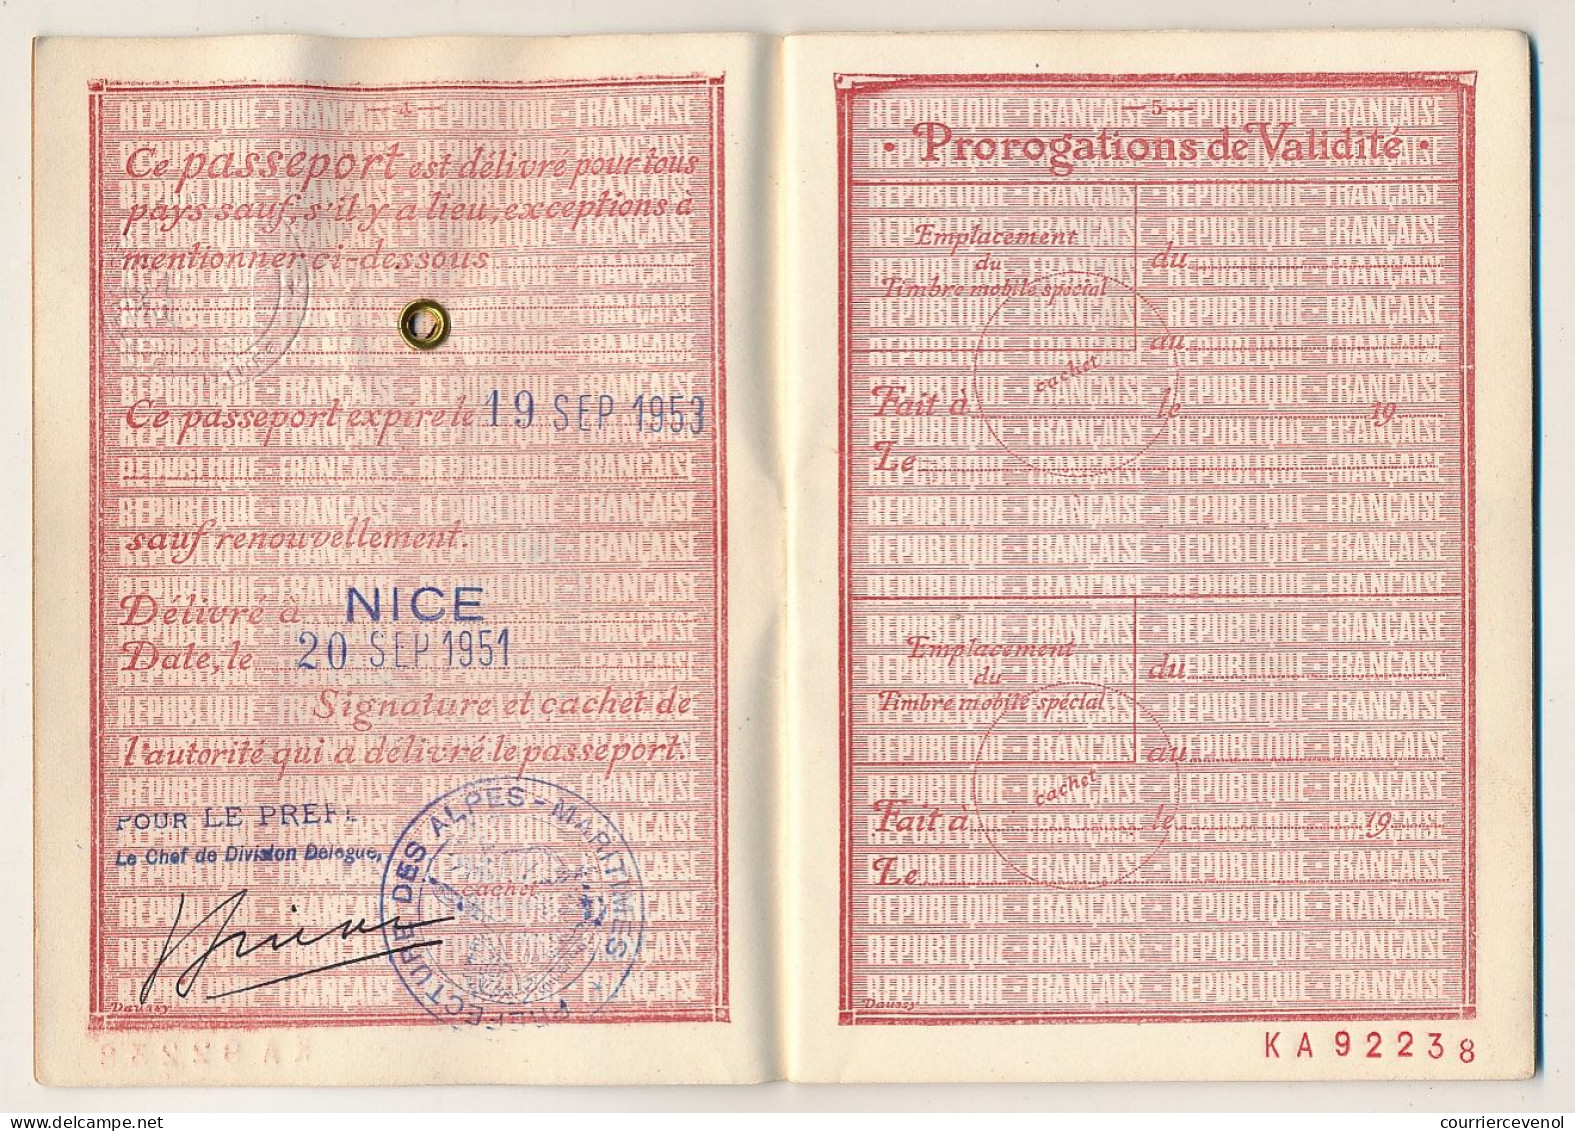 FRANCE - Passeport à l'étranger 700F  - Nice (Alpes Maritimes) - 1951